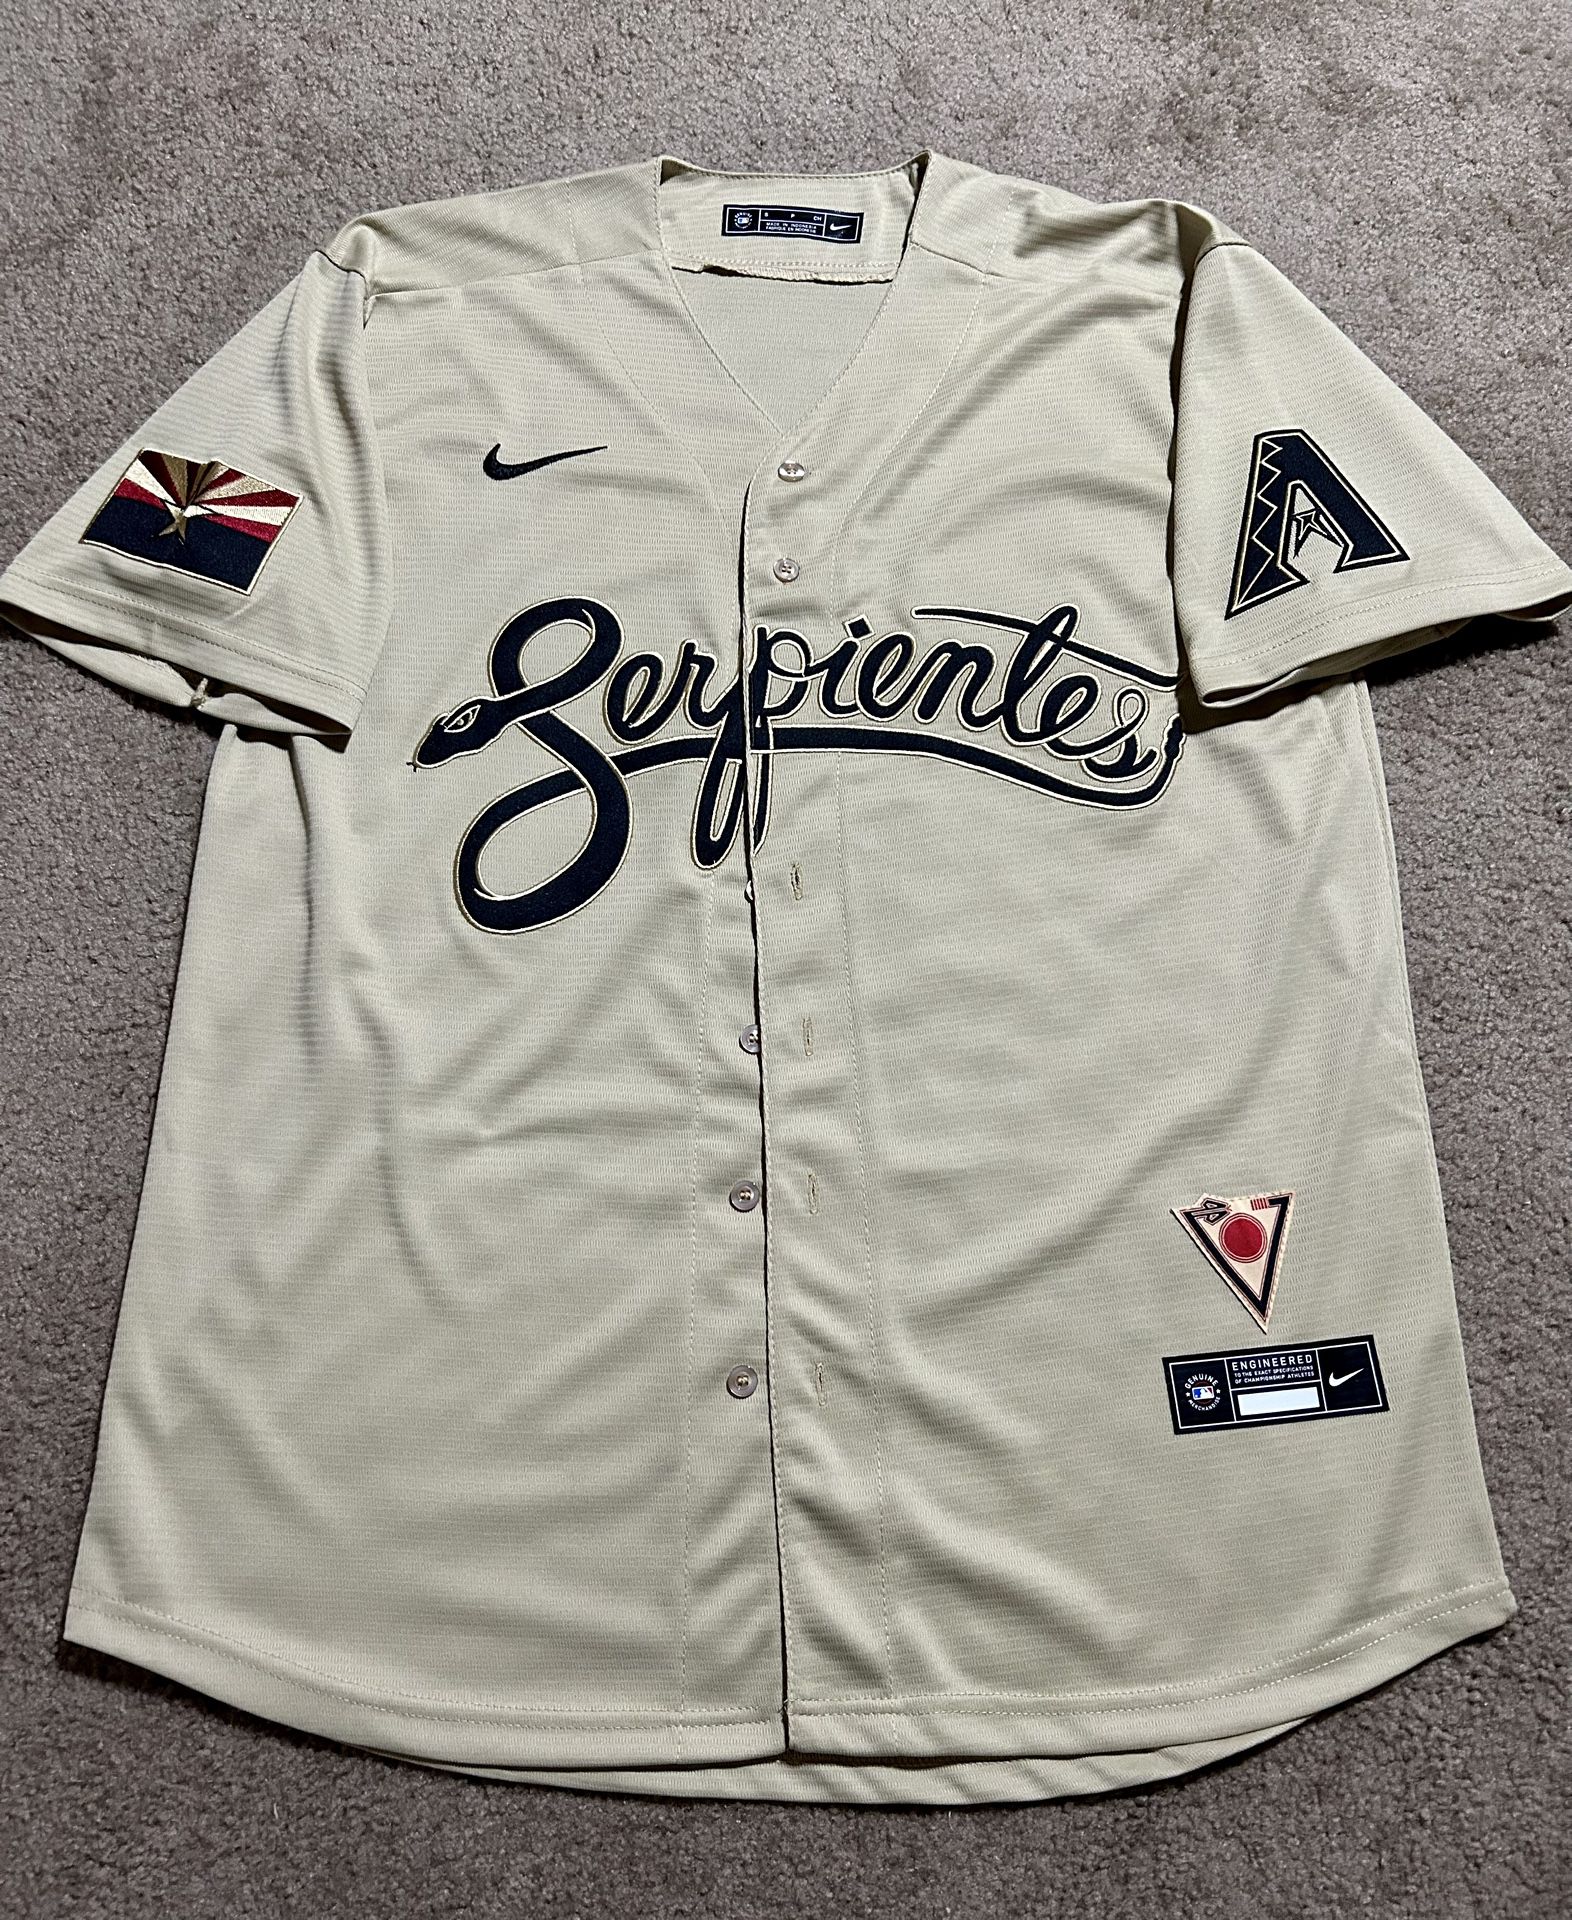 Arizona Diamondbacks ‘Serpientes’ Baseball Jersey